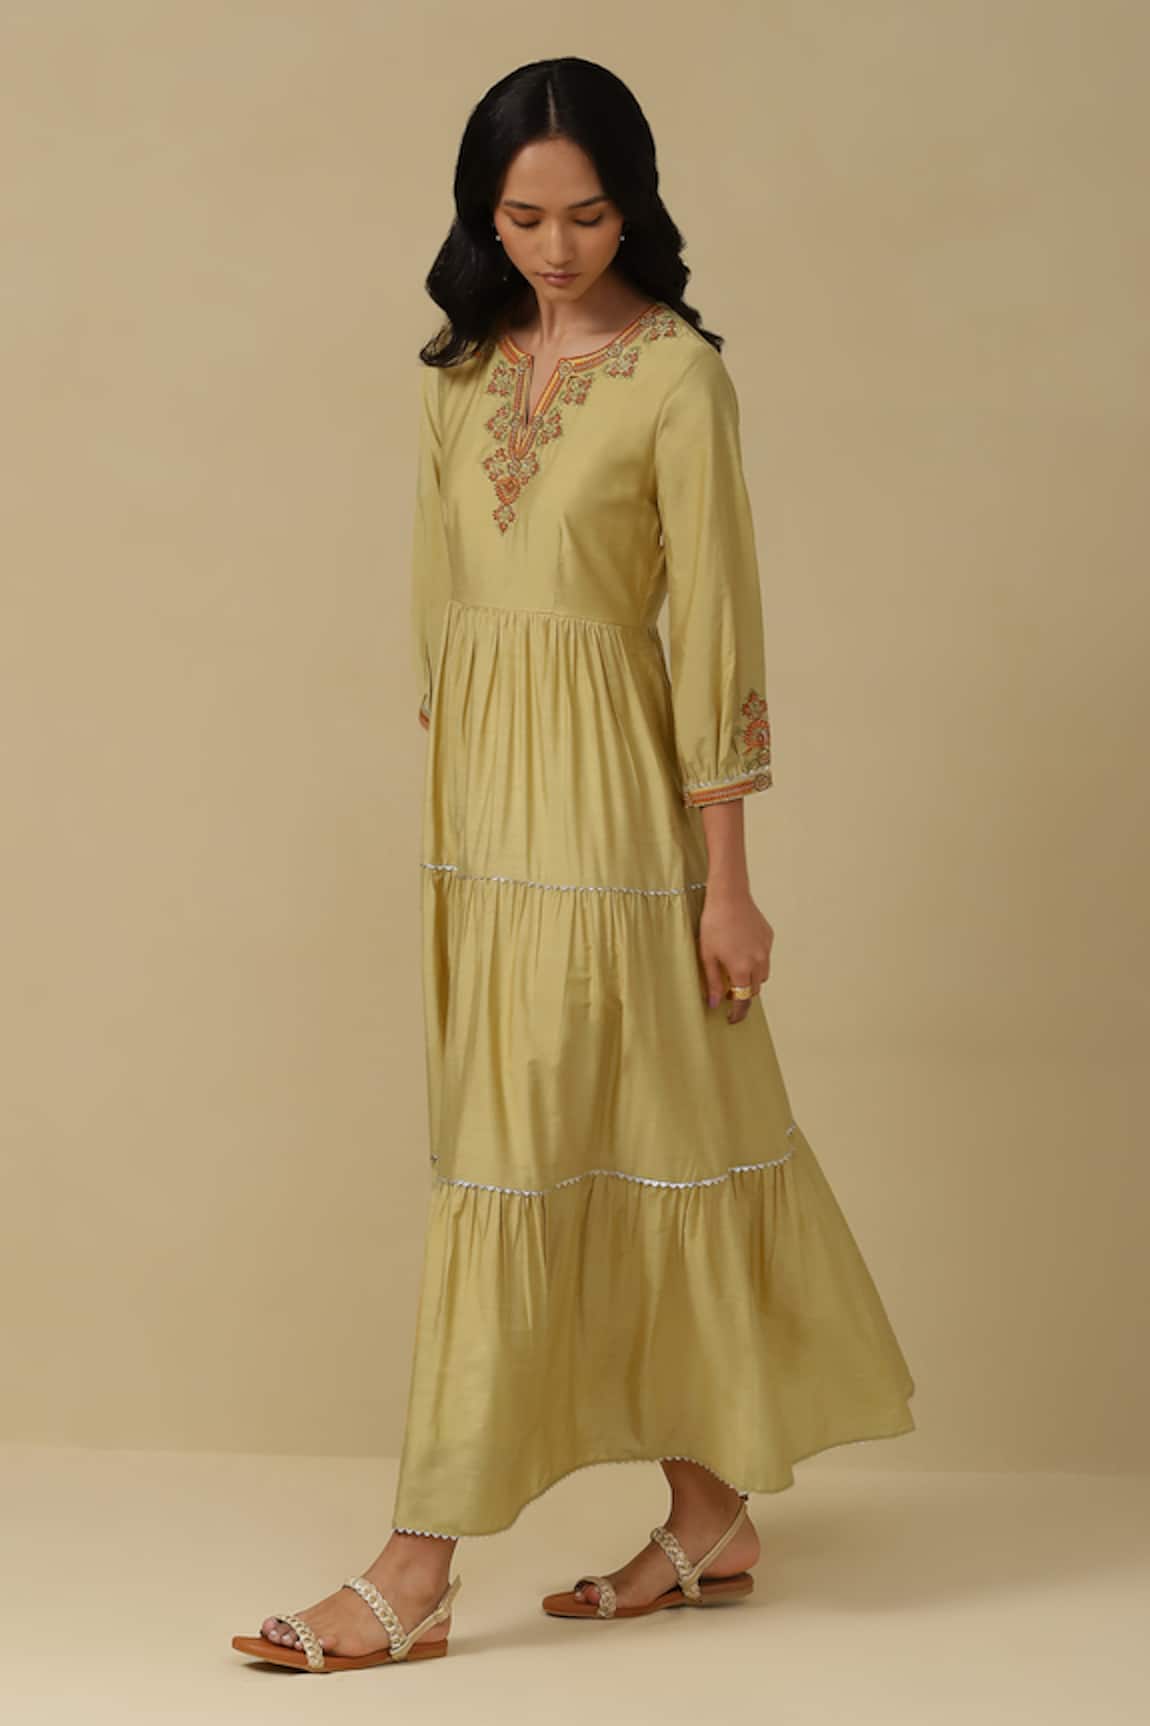 Aarke Ritu Kumar Floral Neckline Embroidered Dress